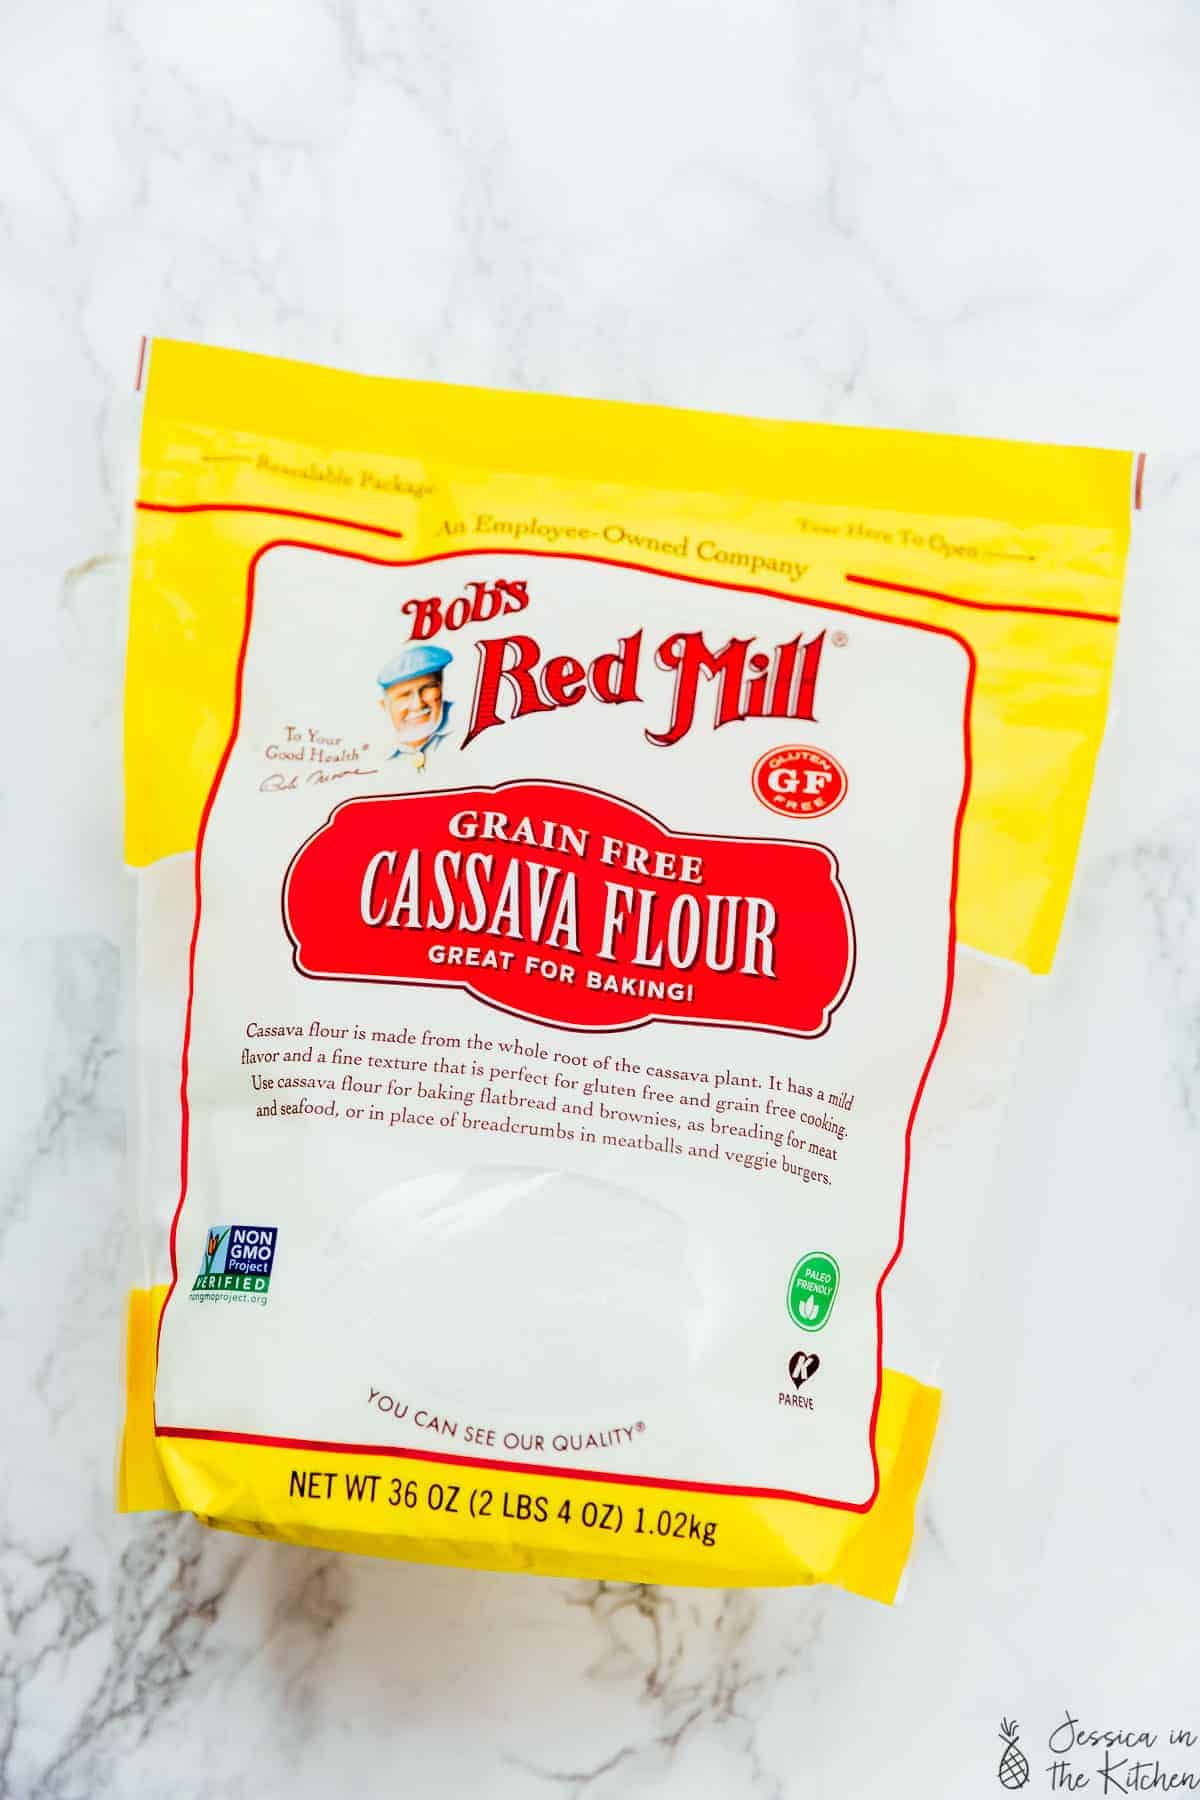 A bag of cassava flour from Bob's Red Mill.